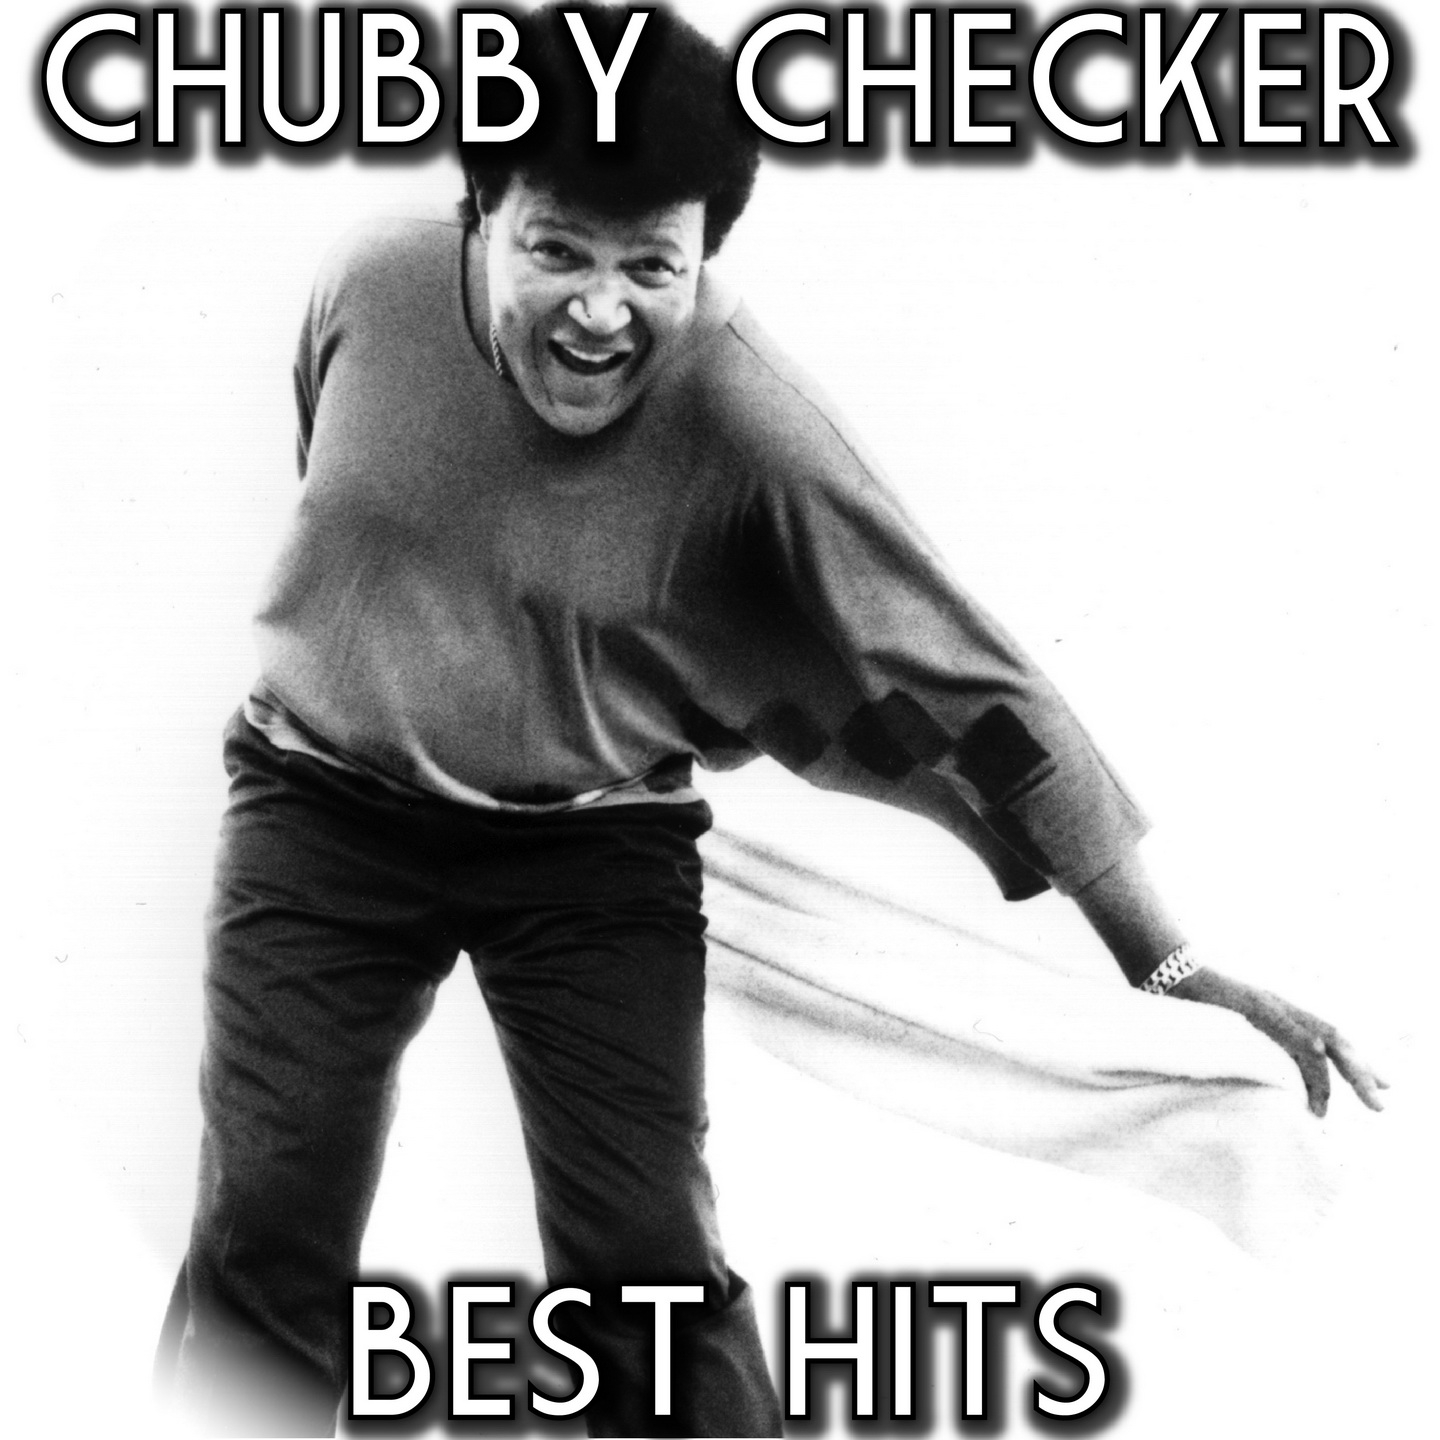 Chubby Checker Best Hits